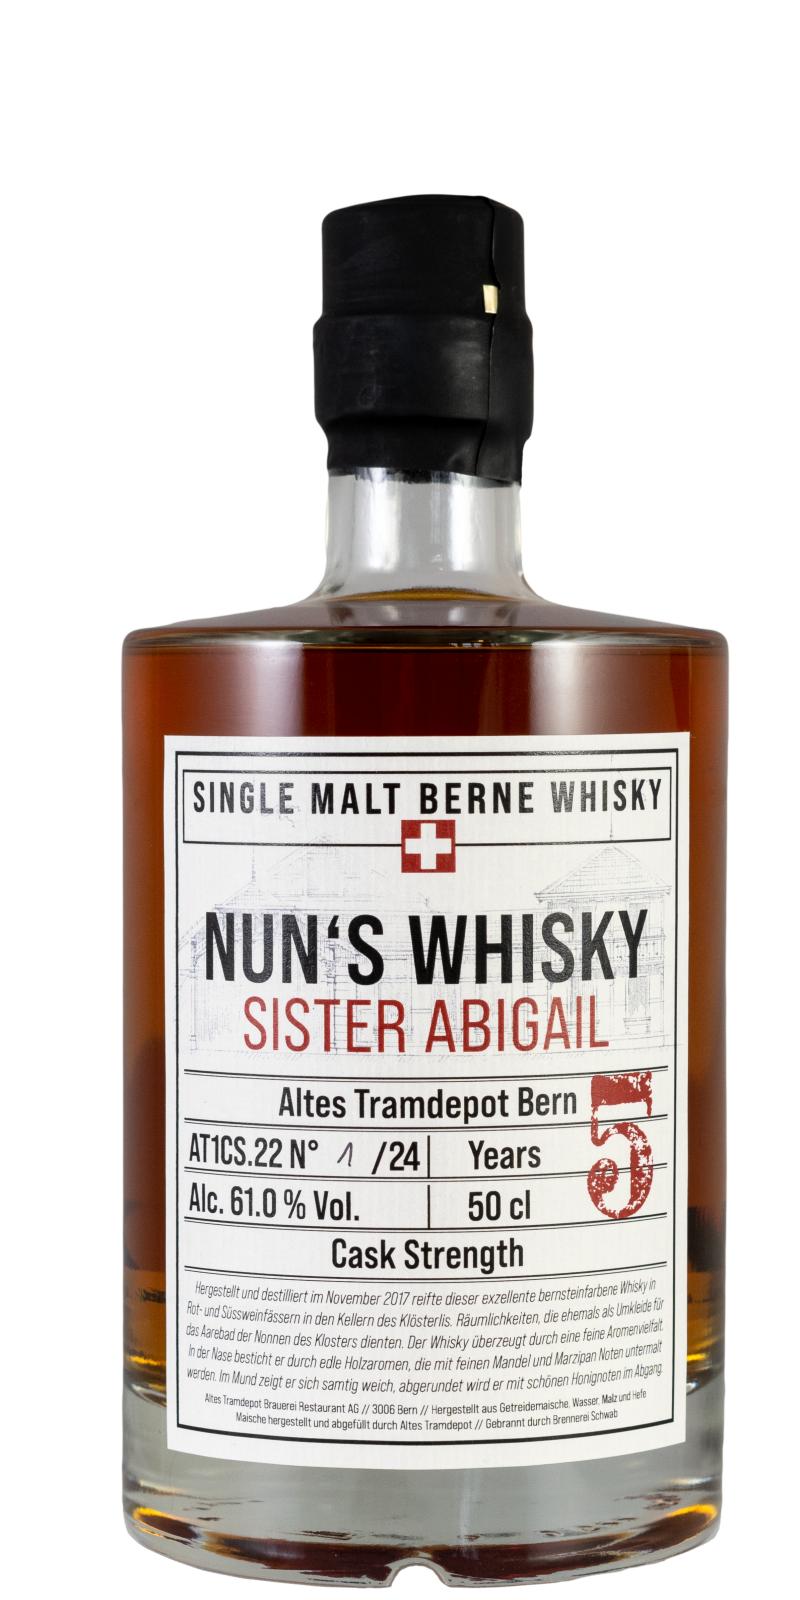 Altes Tramdepot 2017 Nun's Whisky Sister Abigail Cask Strength red wine und Susswein Altes Tramdepot 61% 500ml